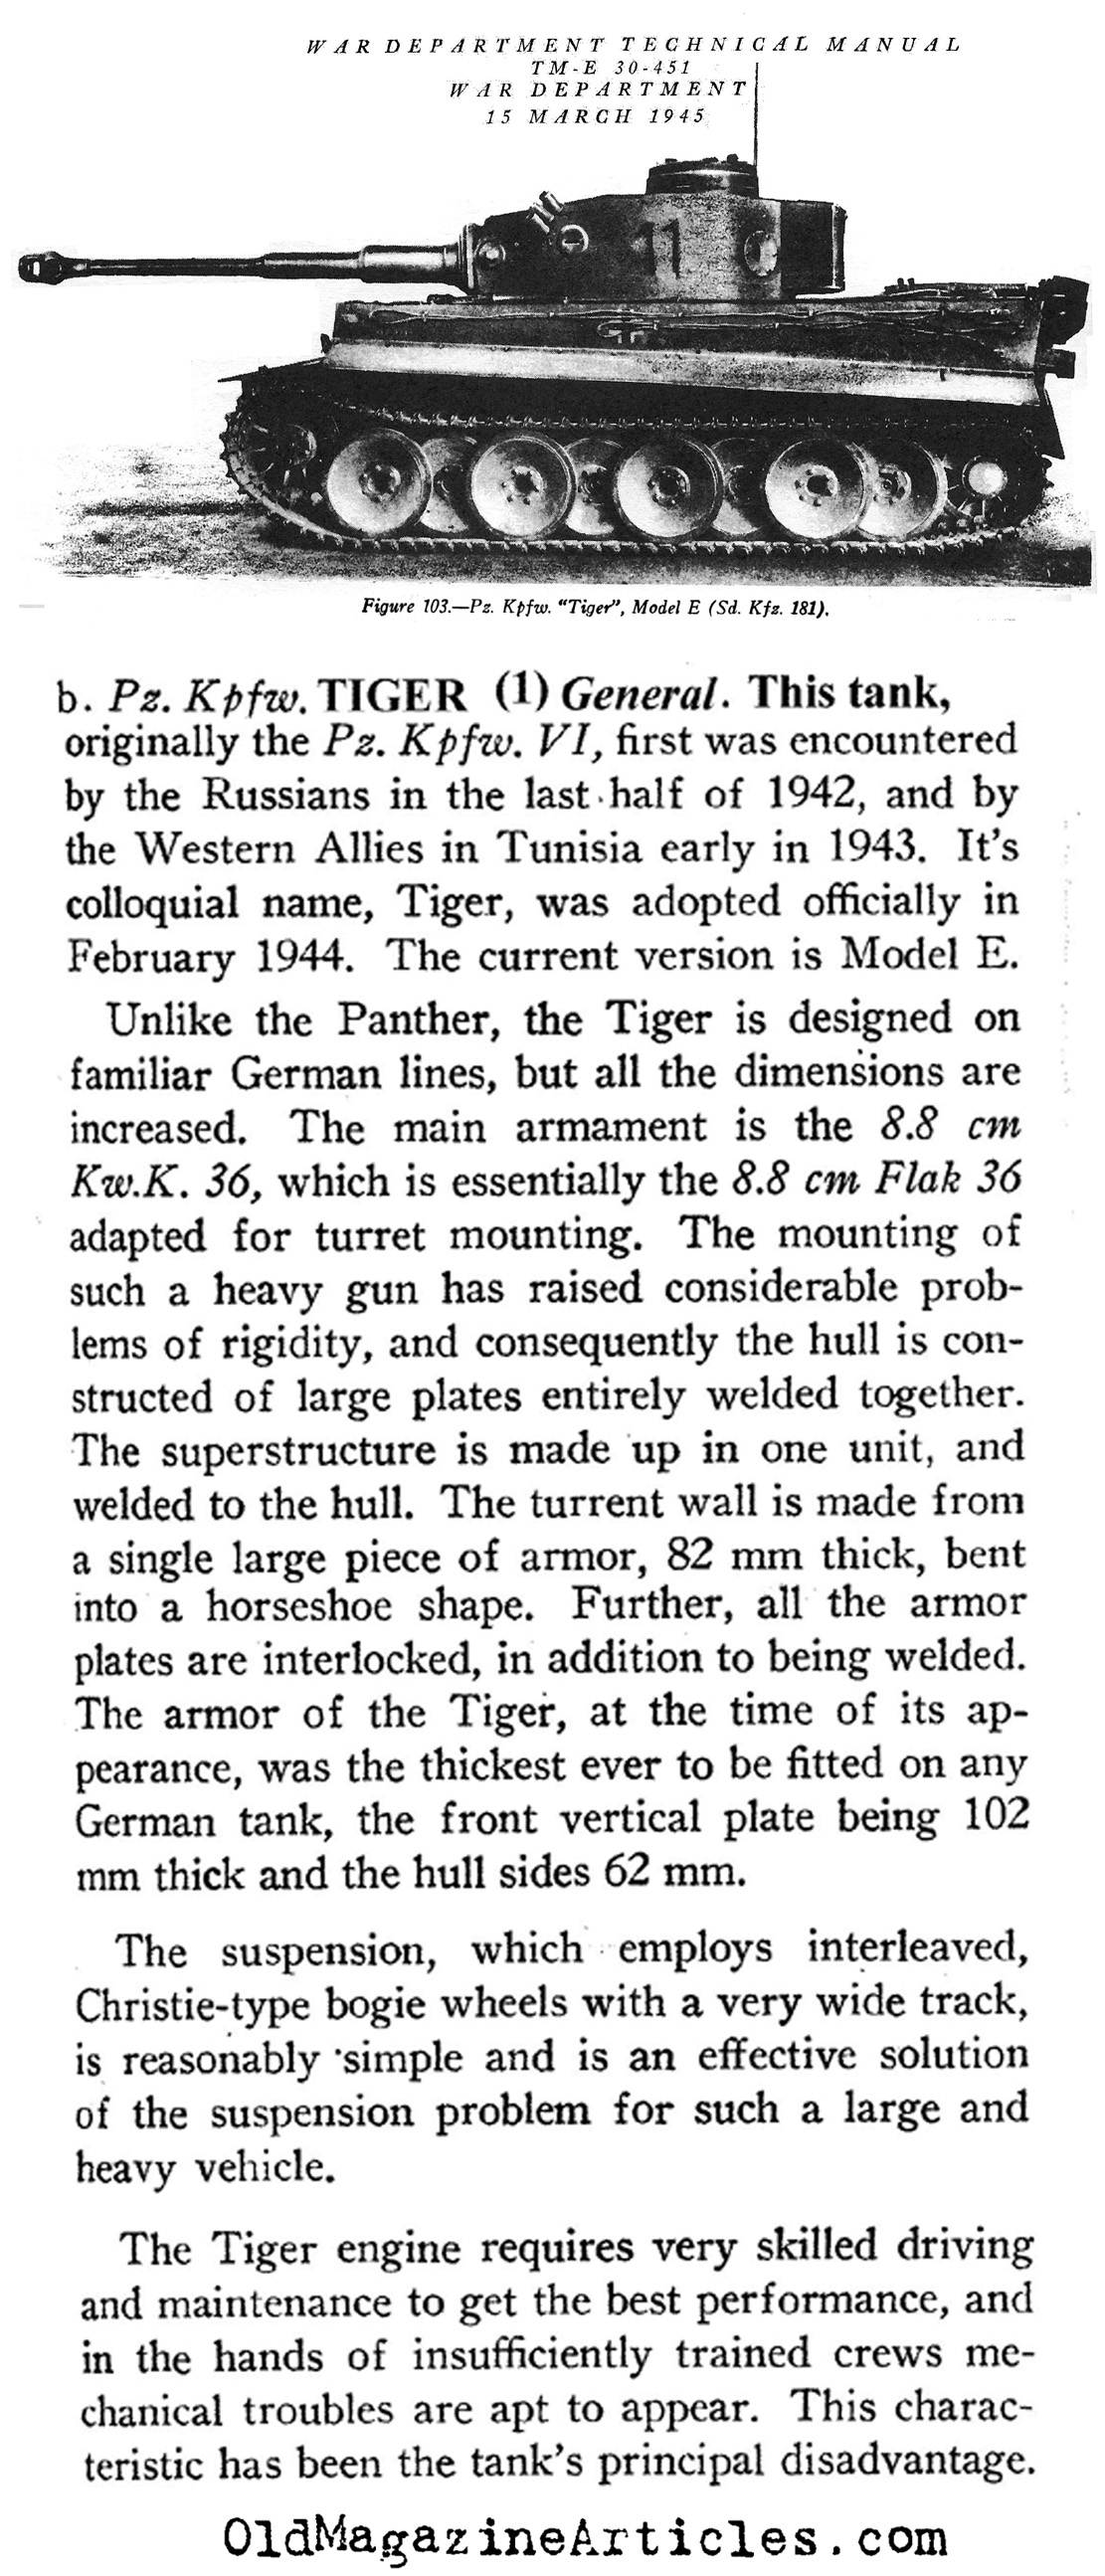 A Study of the German Tiger Tank (The U.S. War Department, 1945)